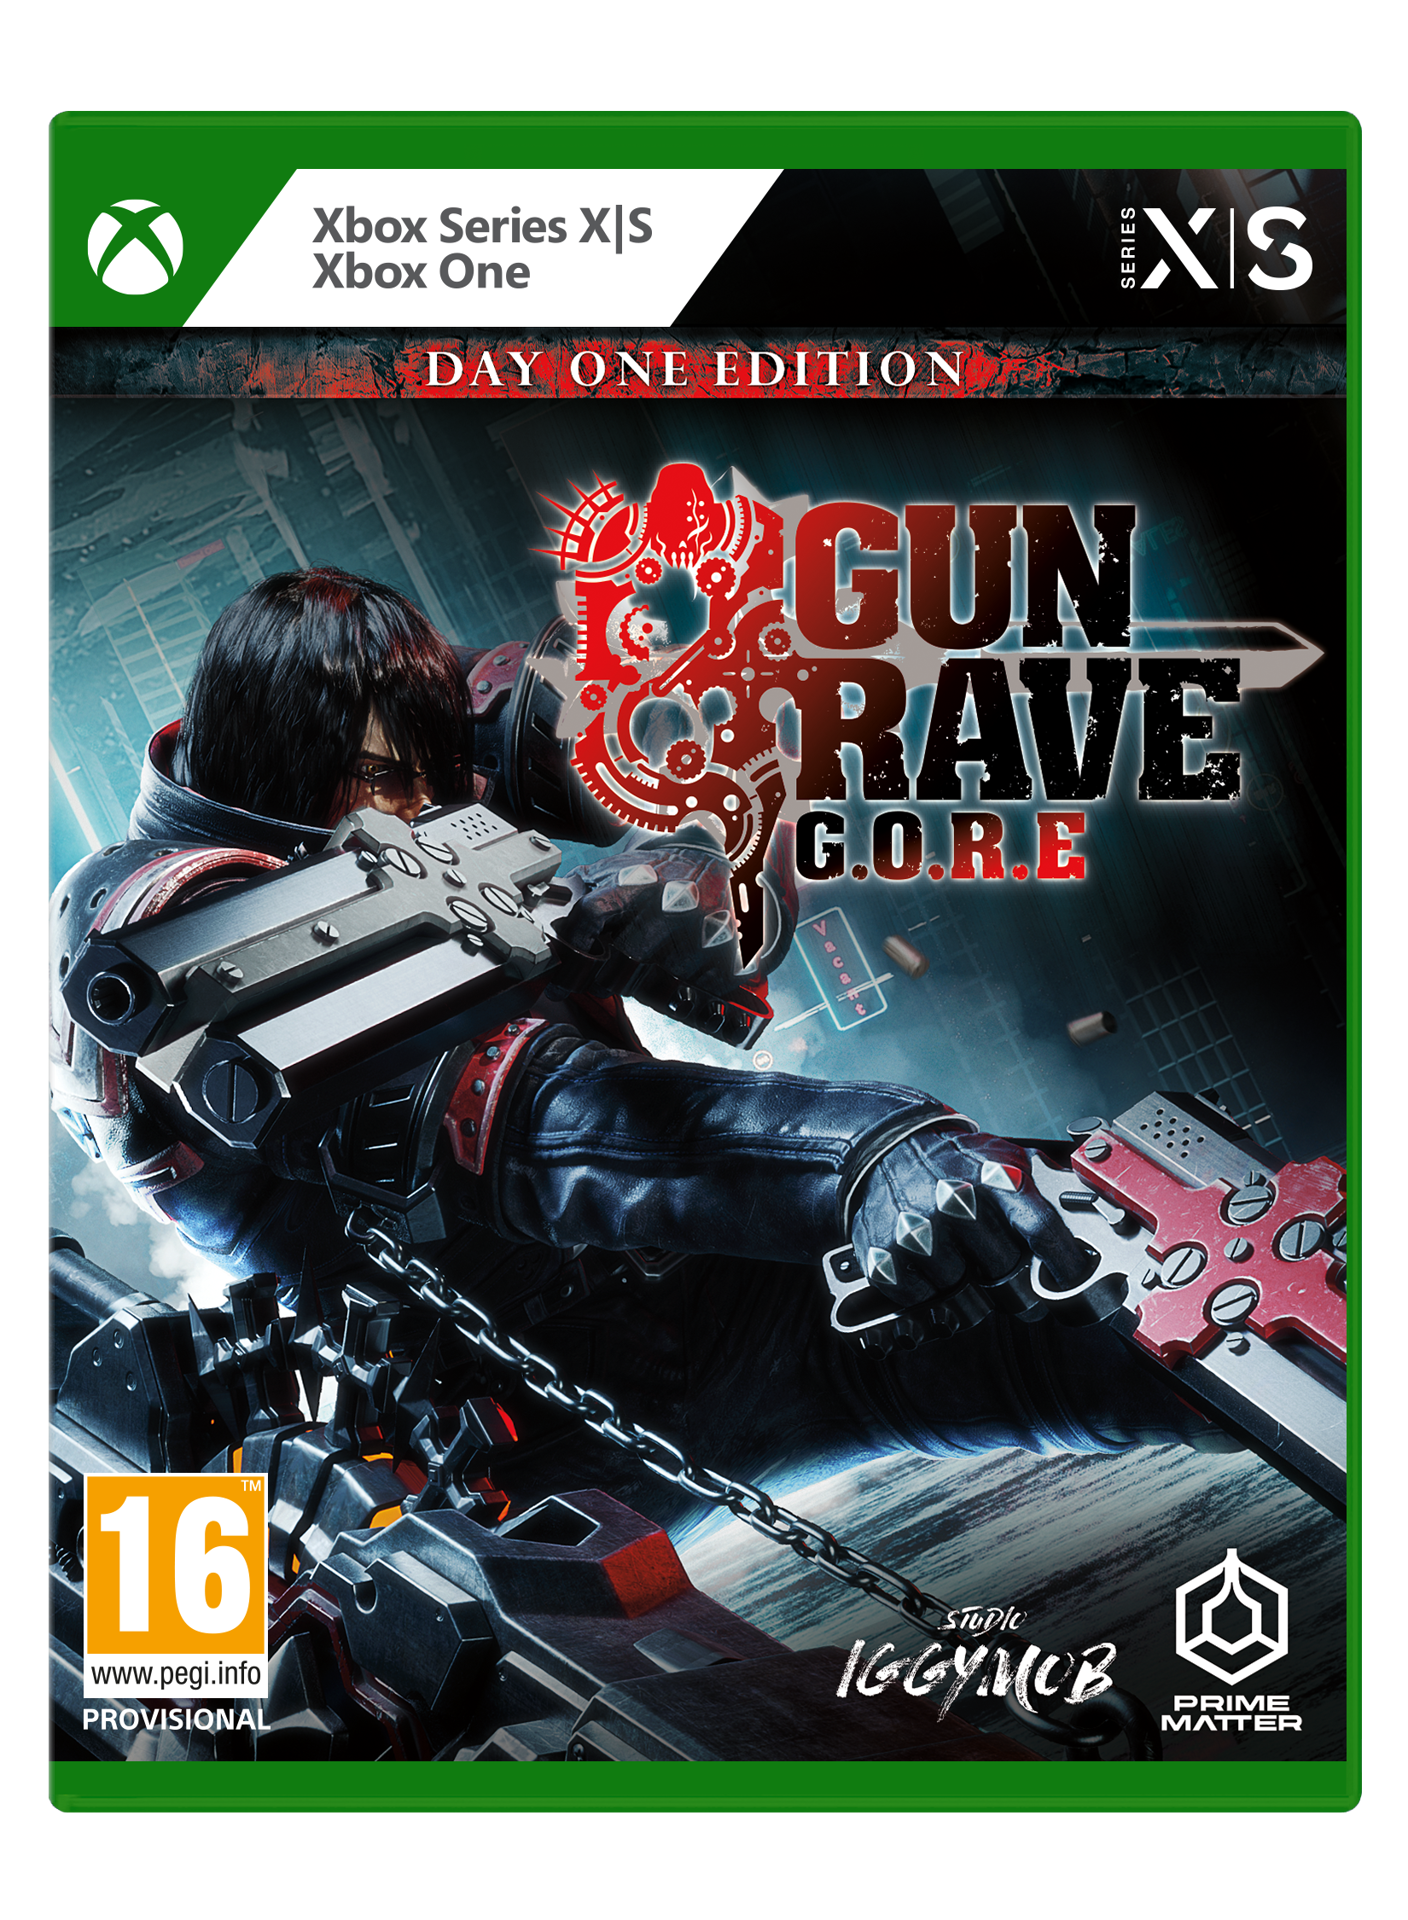 Gungrave G.O.R.E - Day One Edition